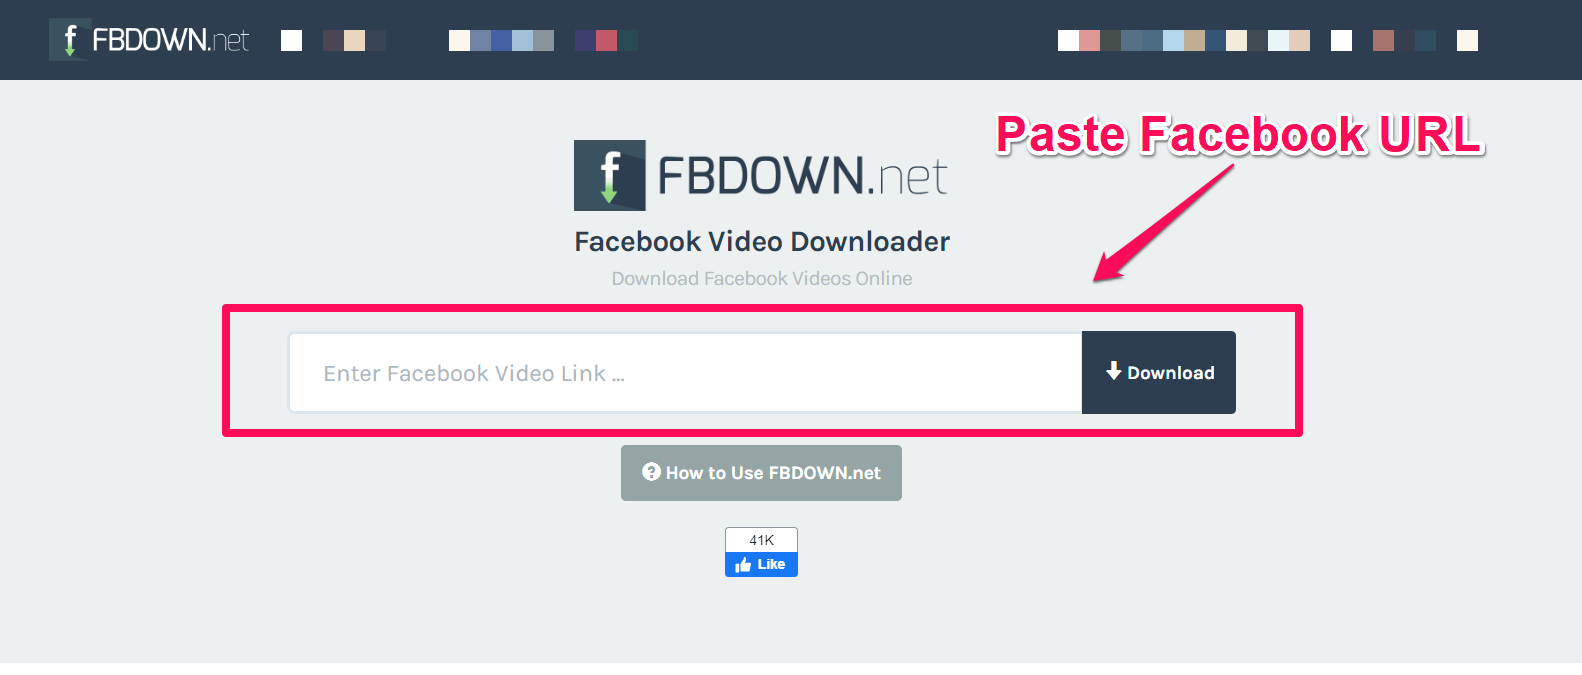 fbdown video downloader online